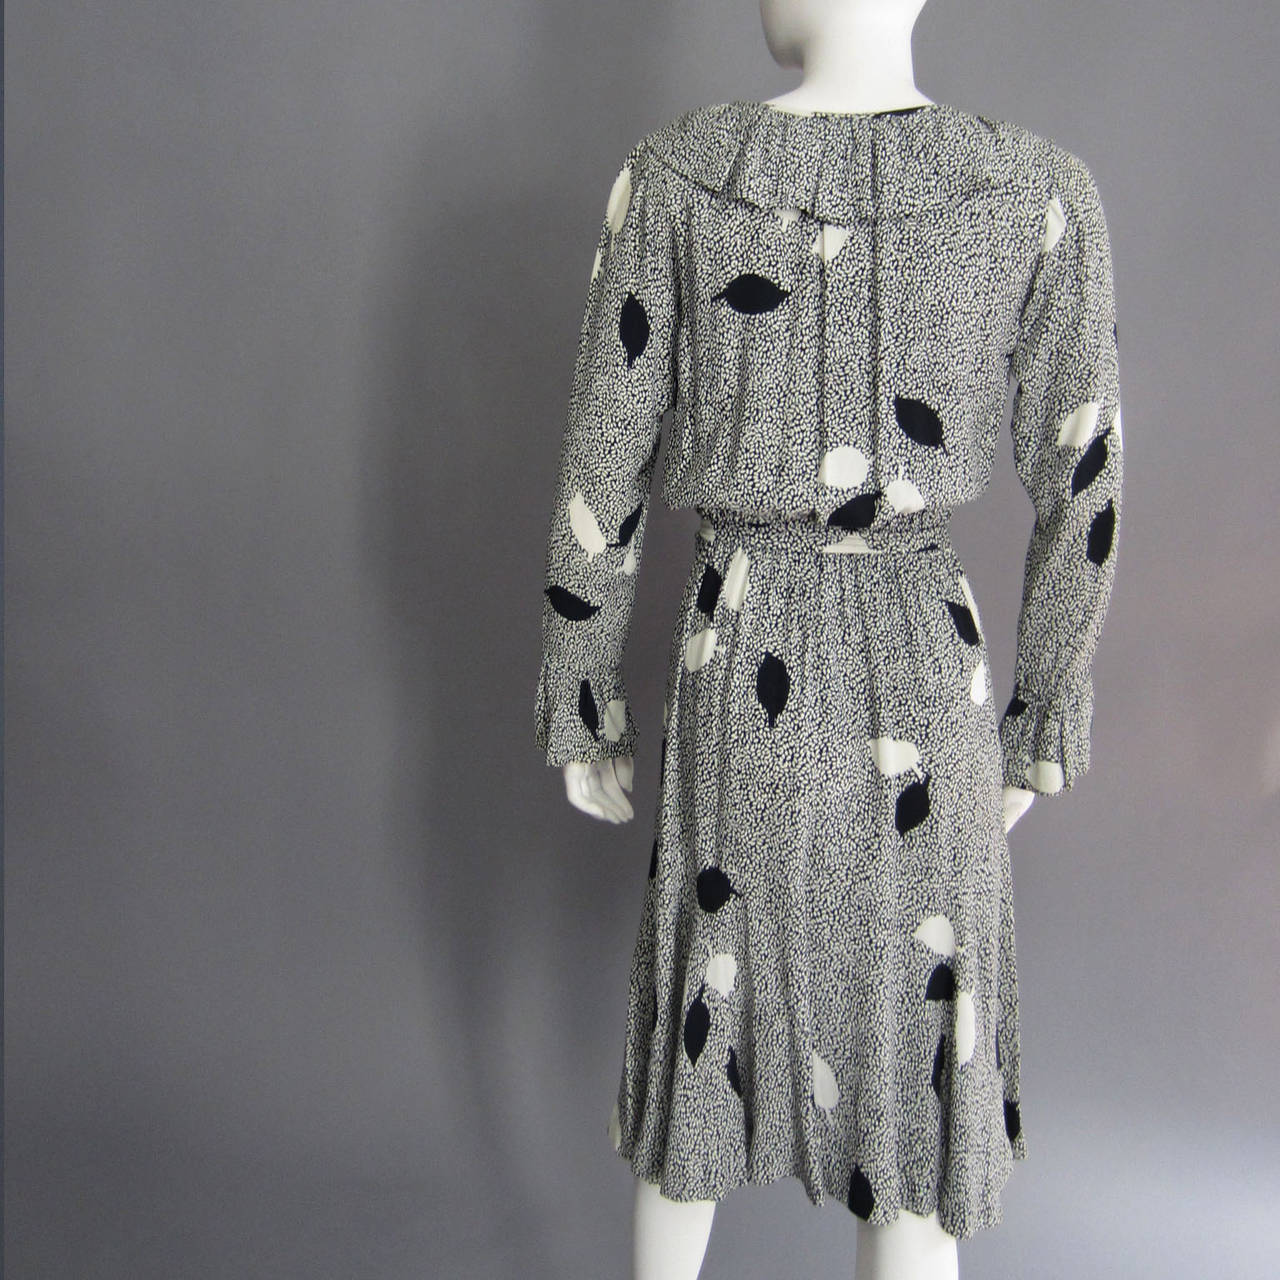 YVES SAINT LAURENT Leaf Print Dress with Ruffle Detail 1